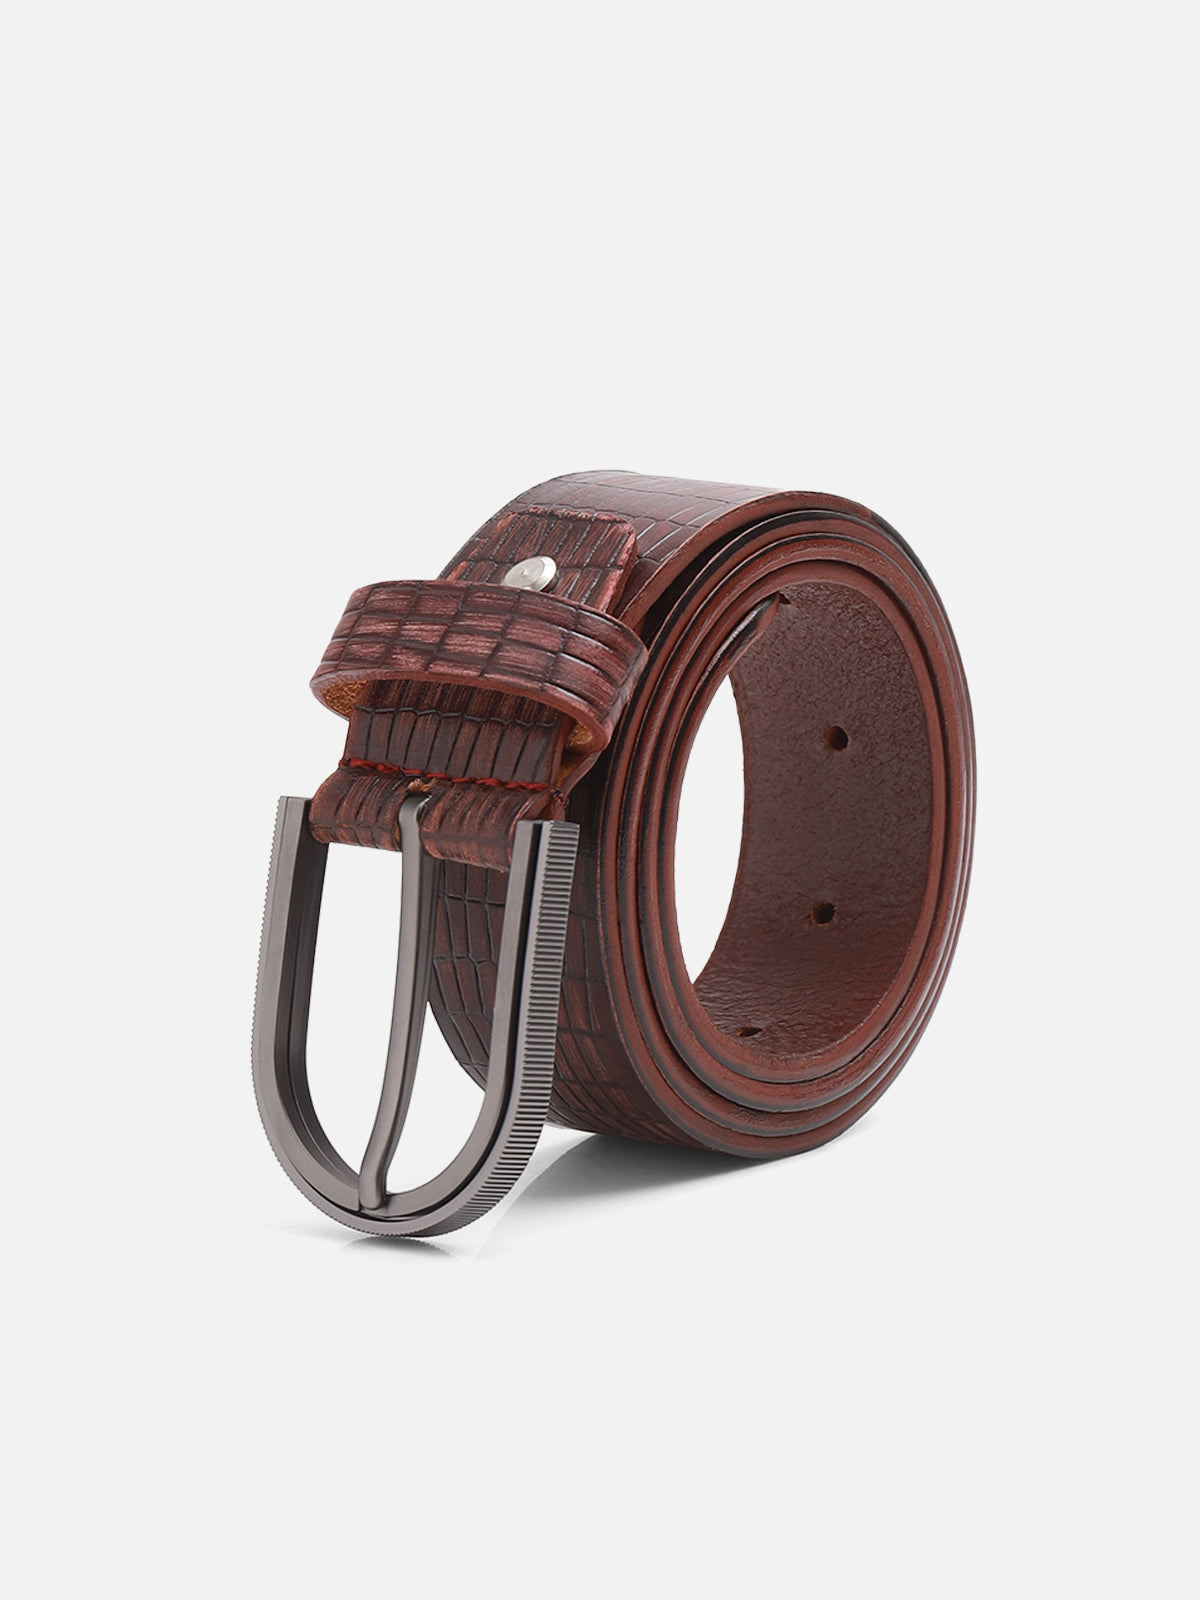 Maroon Leather Belt - FALB23-013